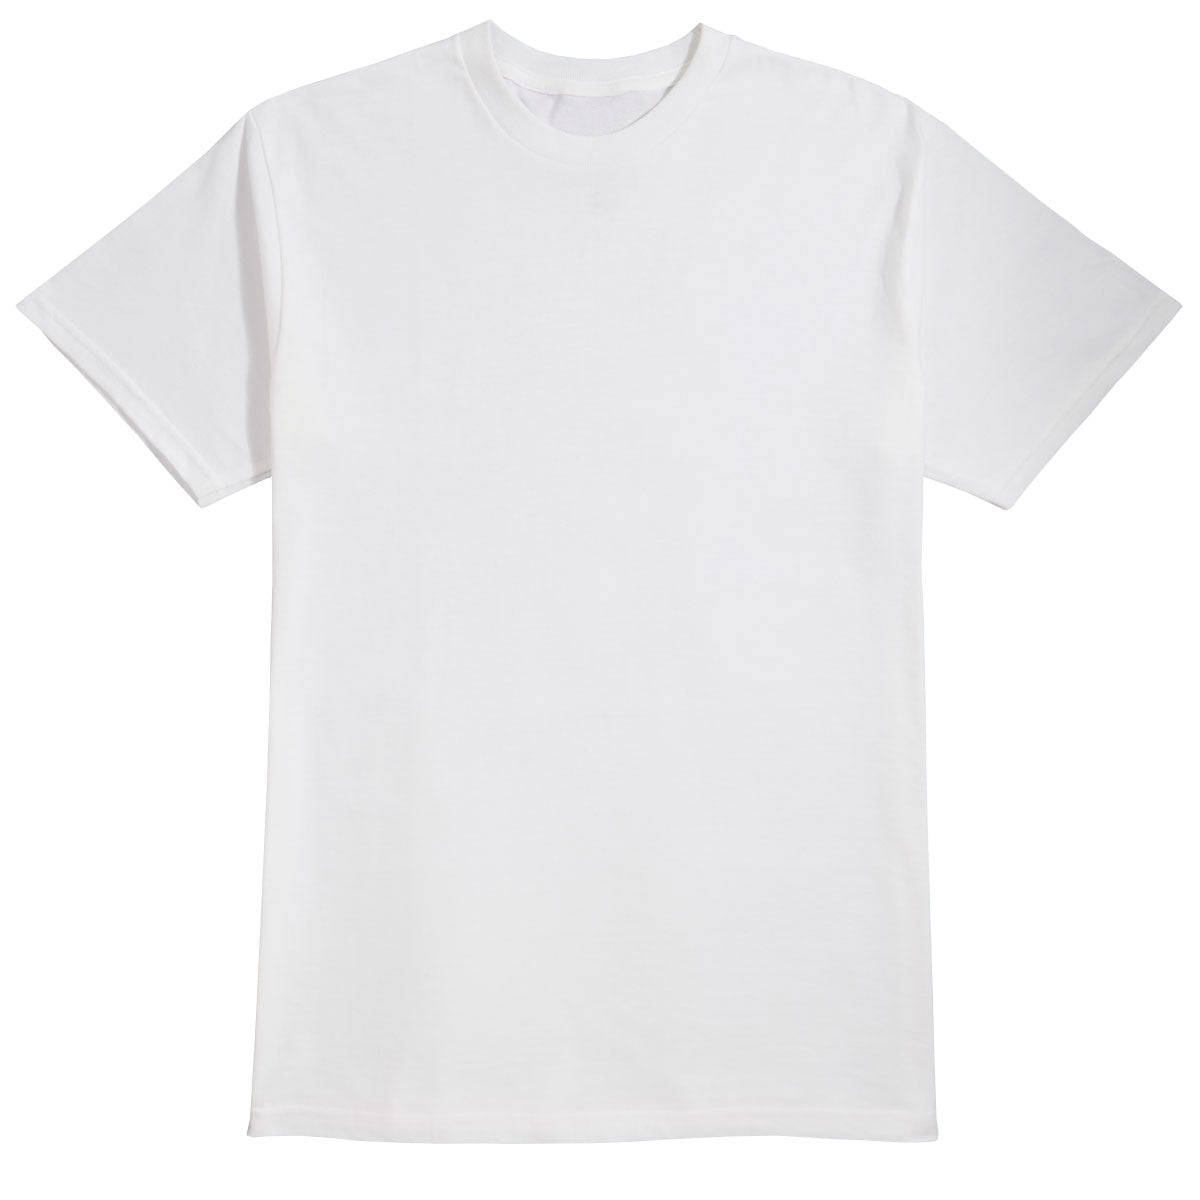 Converse Spider Web T-Shirt - White - XL image 1